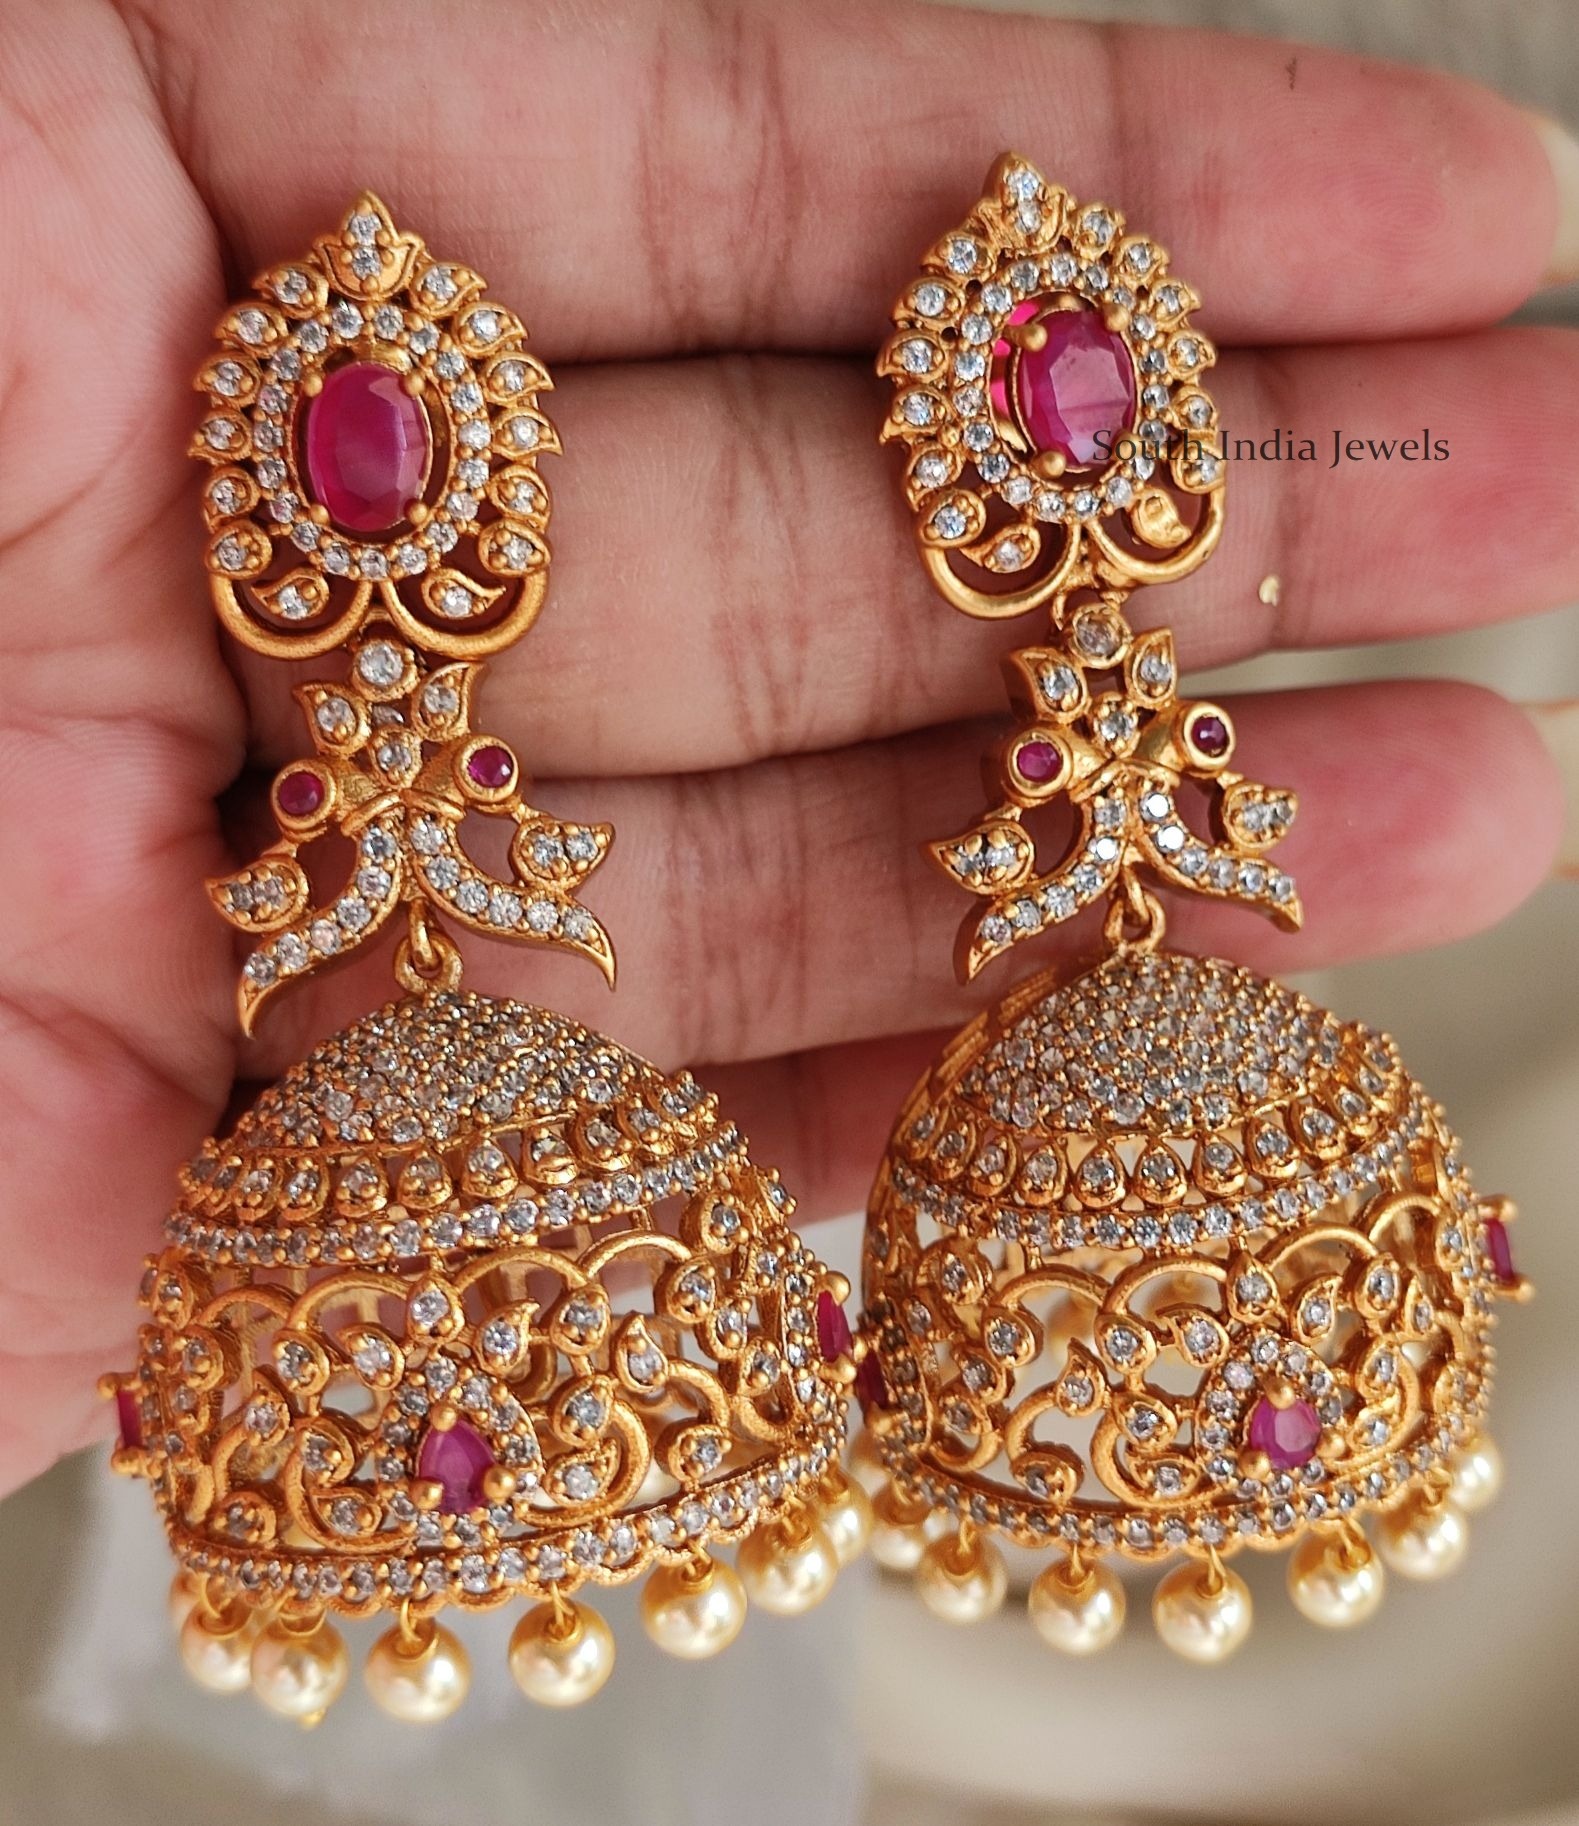 Unique AD Stone Bridal Jhumkas - South India Jewels